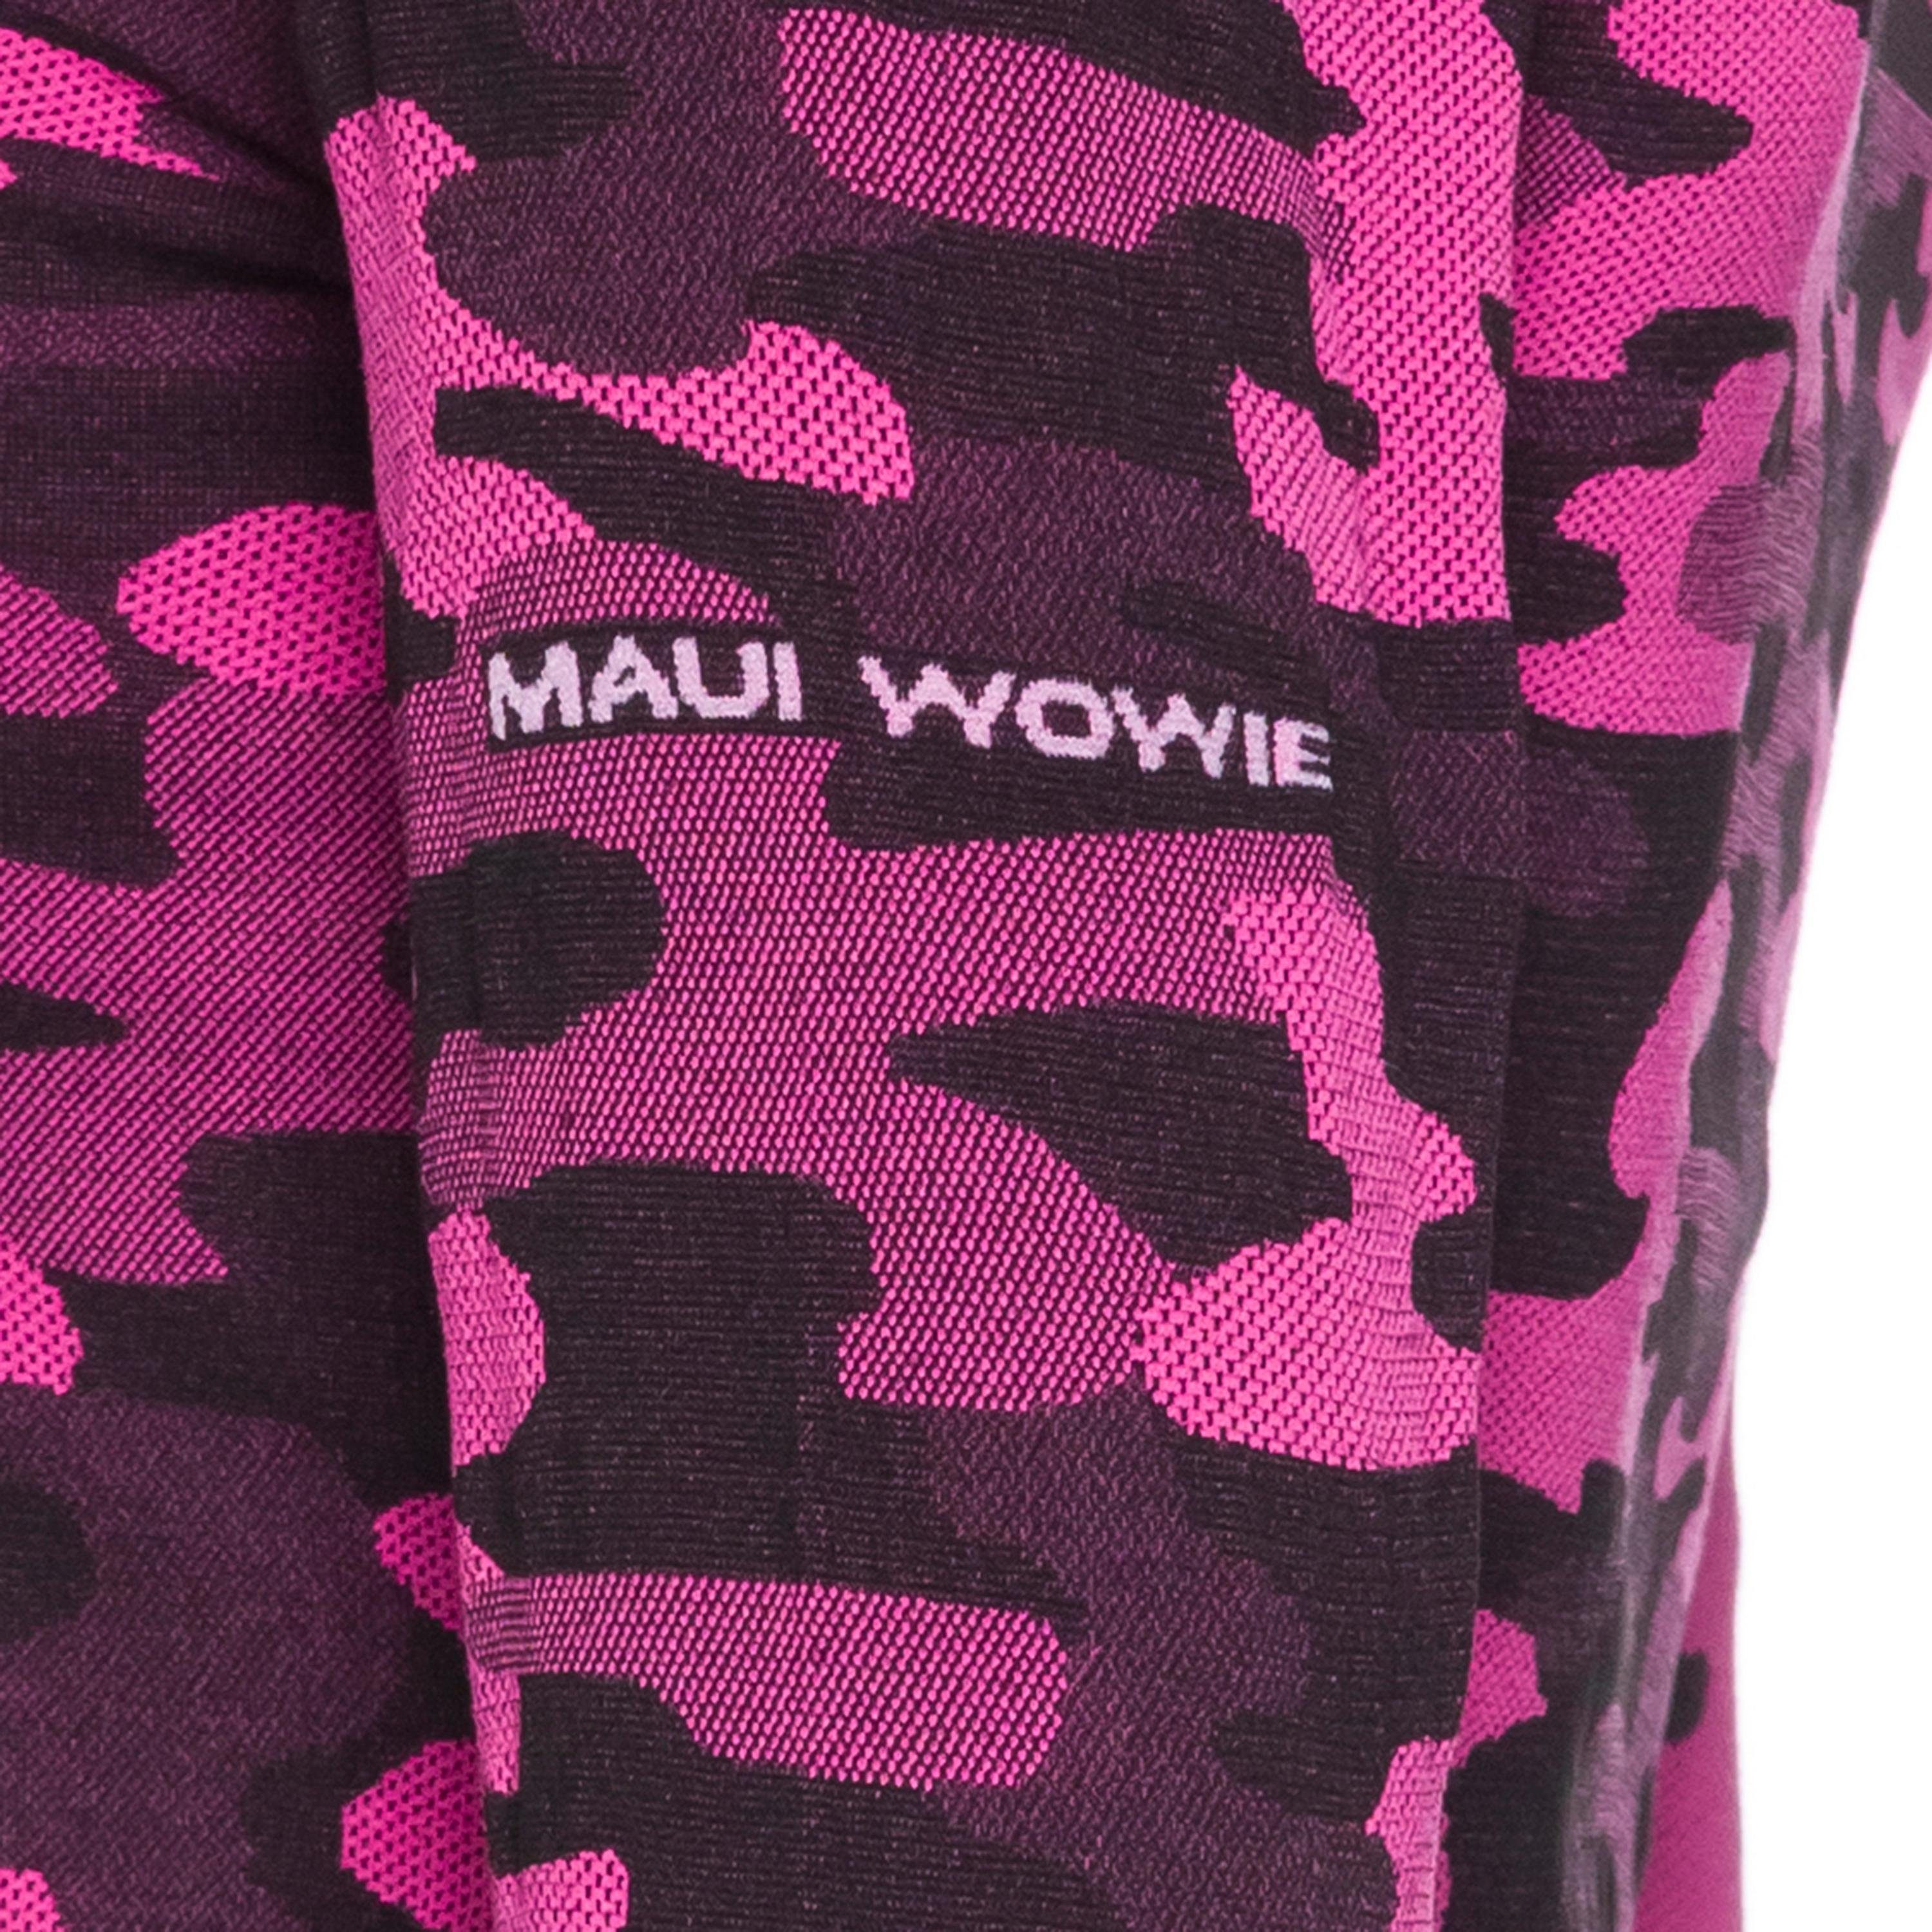 Wowie Maui Funktionsunterhemd